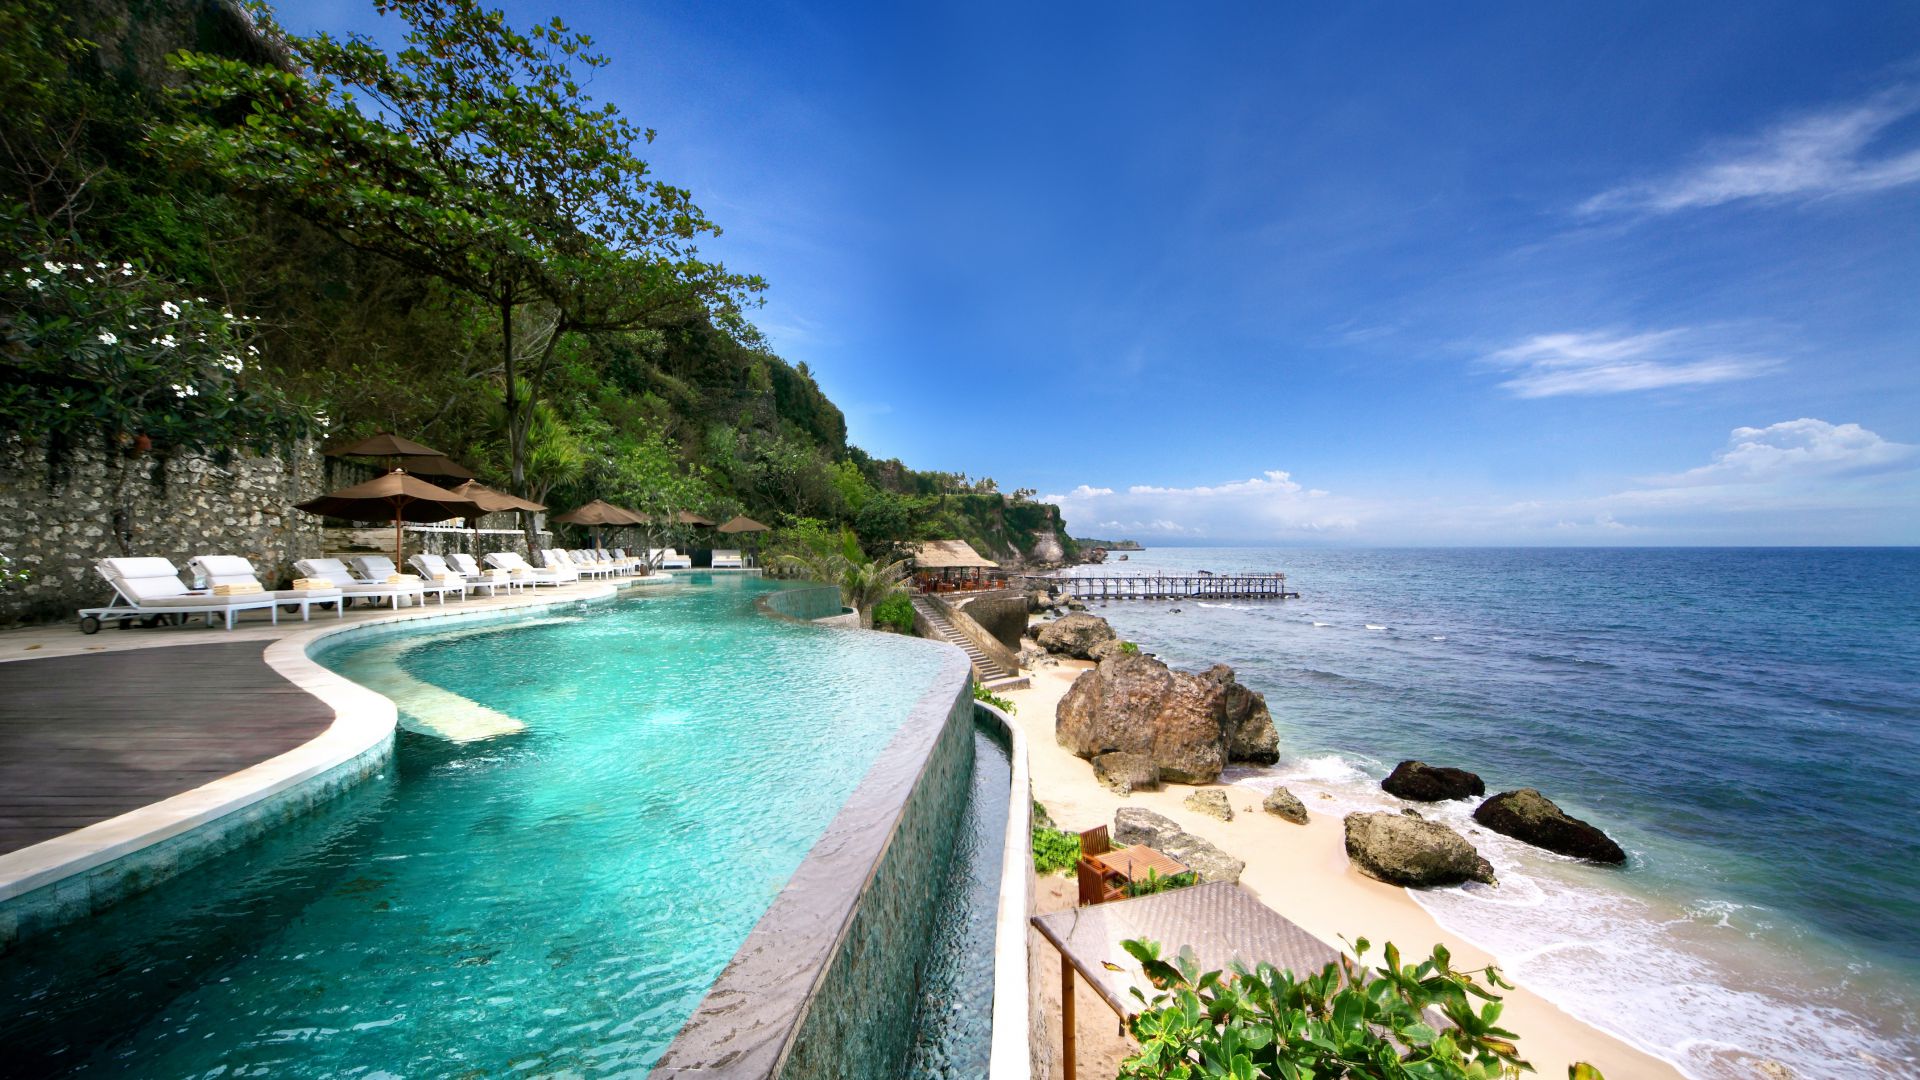 AYANA Resort and Spa, Bali, Jimbaran, Best hotels, tourism, travel, resort, booking, vacation, pool (horizontal)